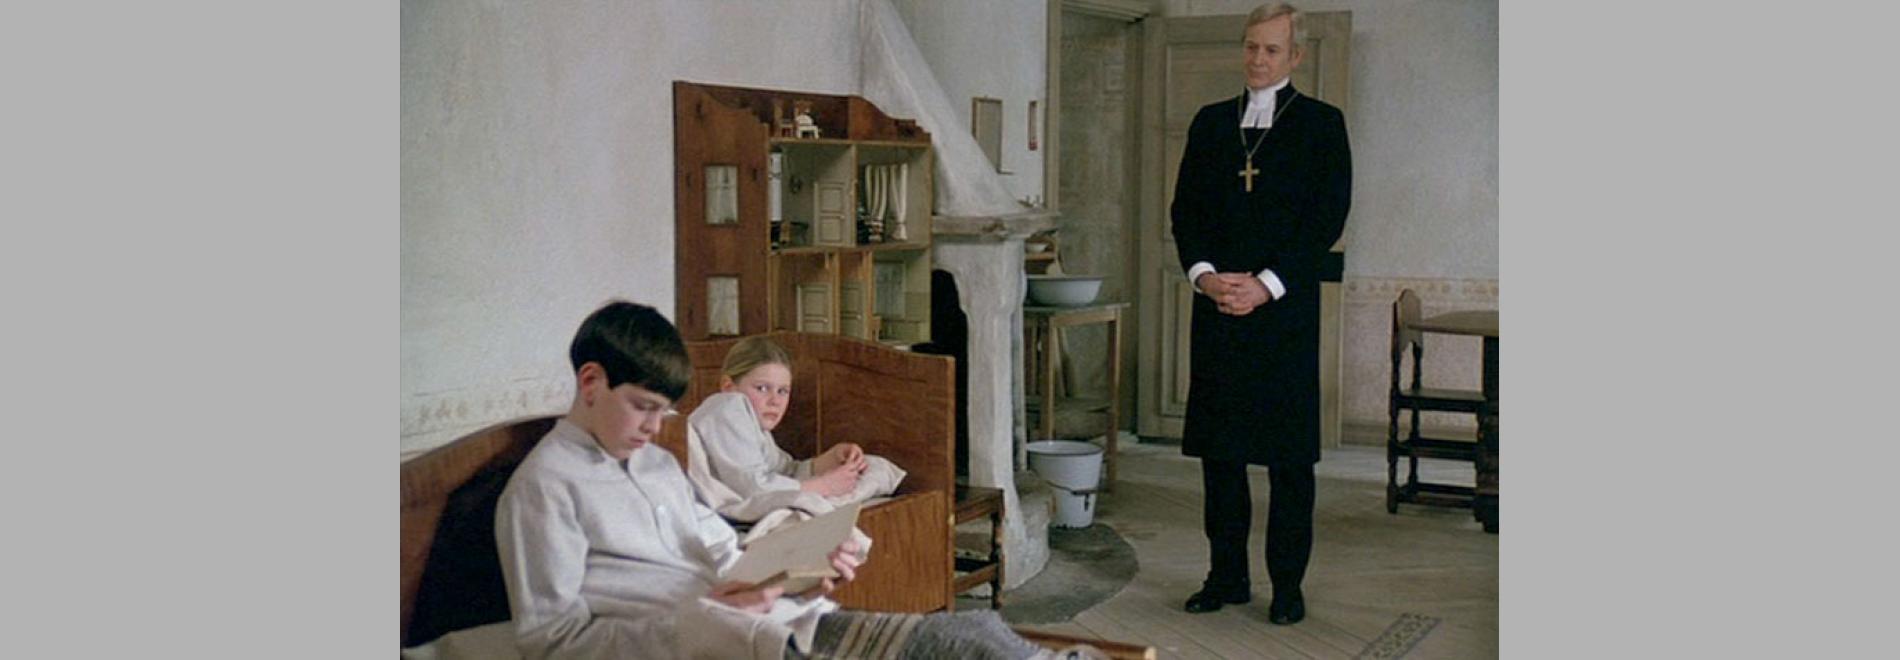 Fanny & Alexander (Ingmar Bergman, 1982)